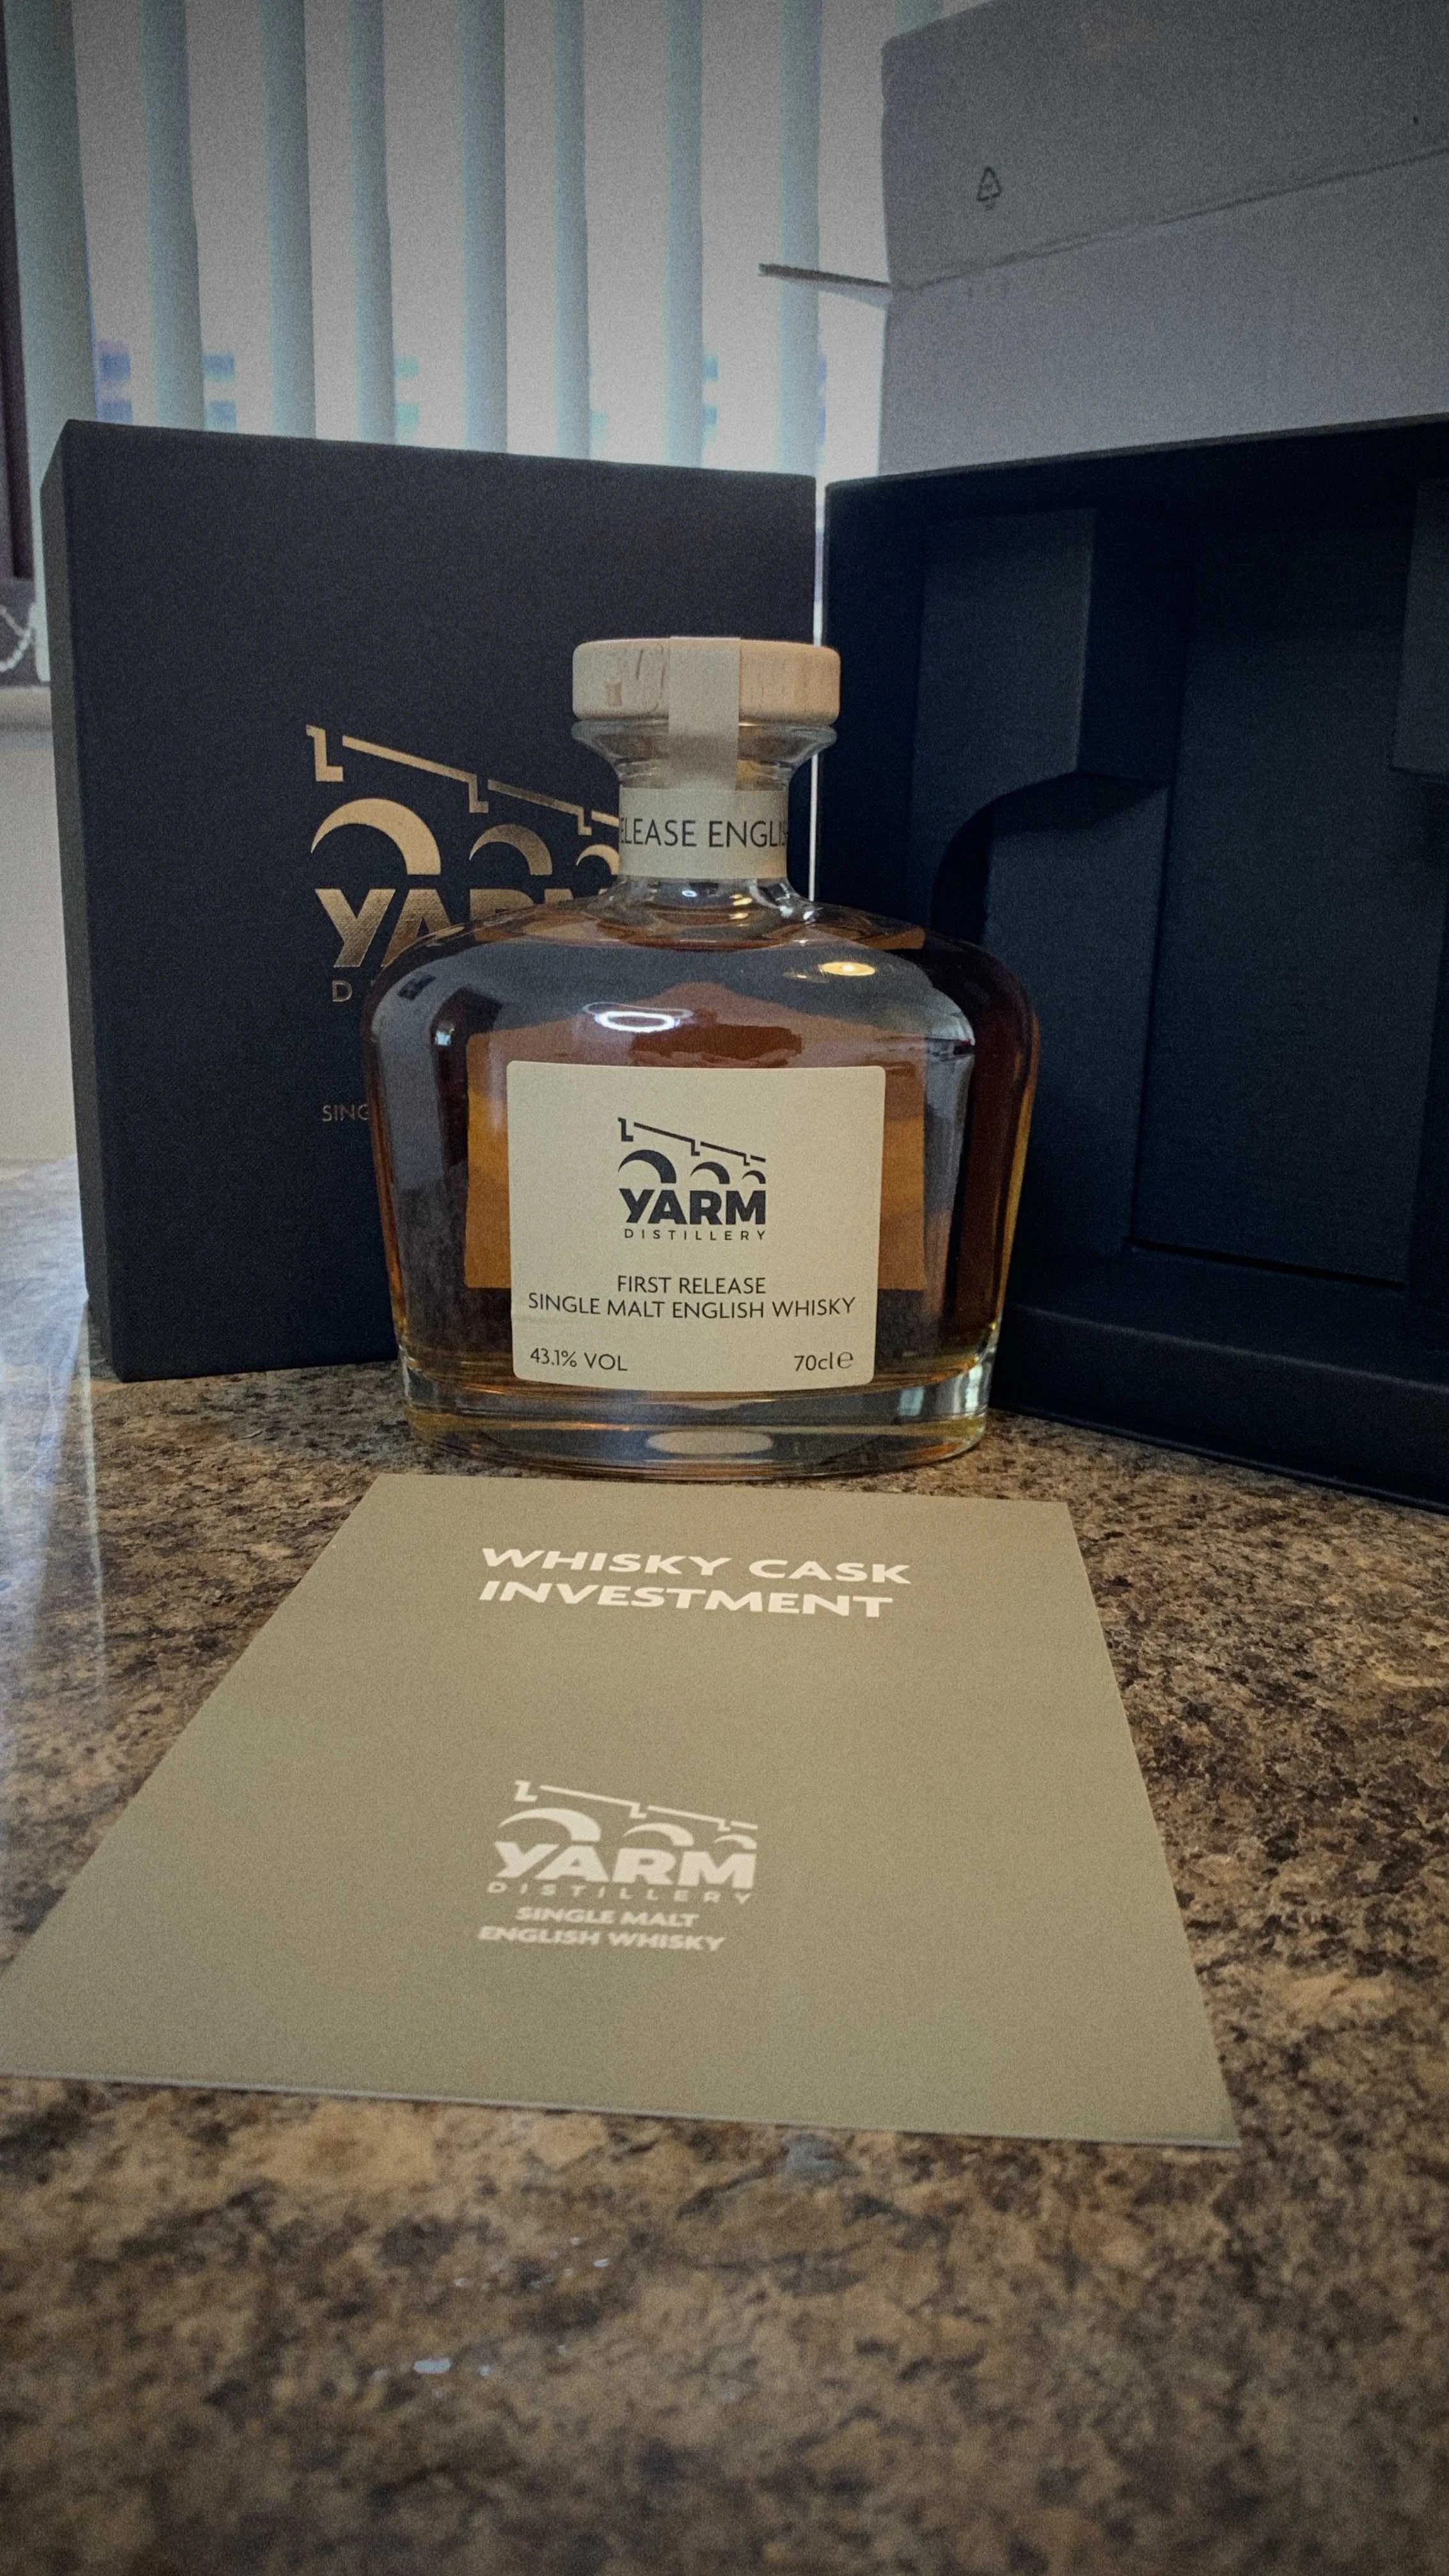 Yarm whisky first release single malt